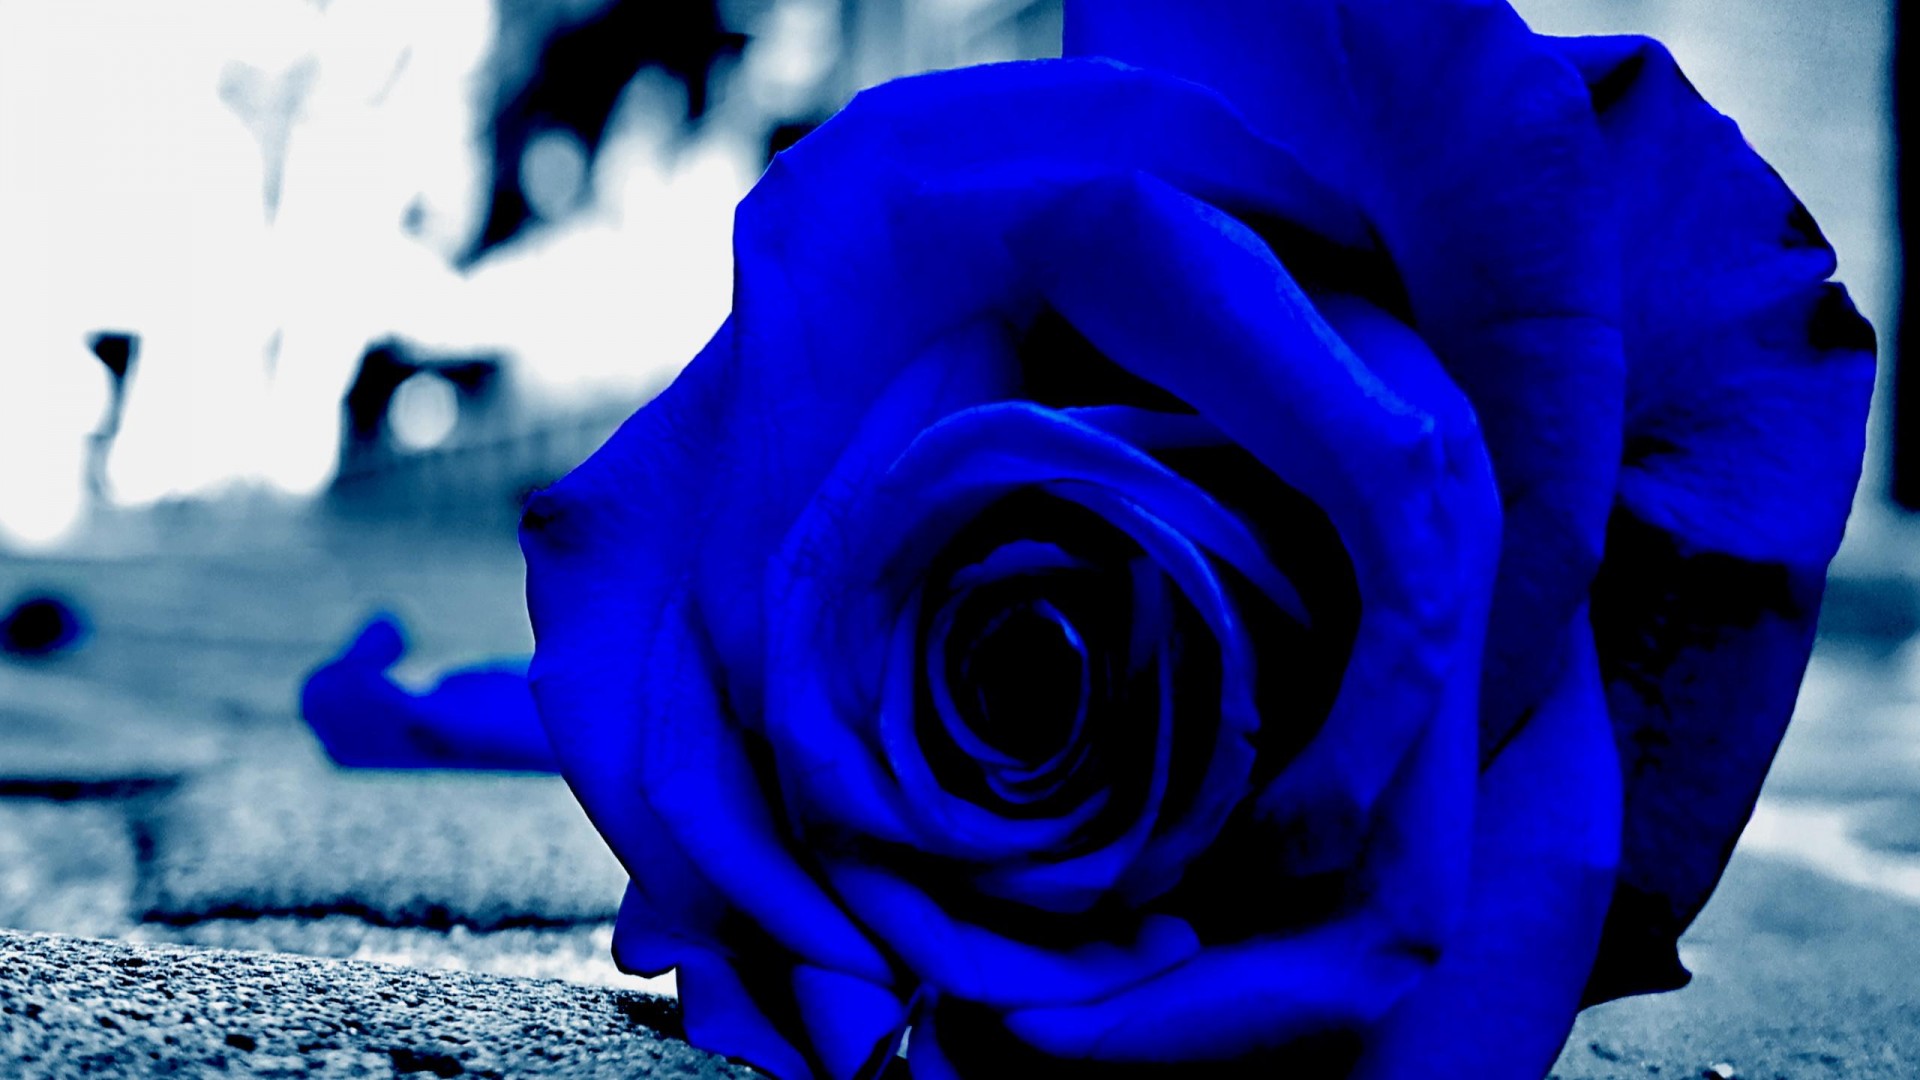 Best Of Mobile Iphone Flower Rose Blue Rose Backgrounds Wallpaper Hd